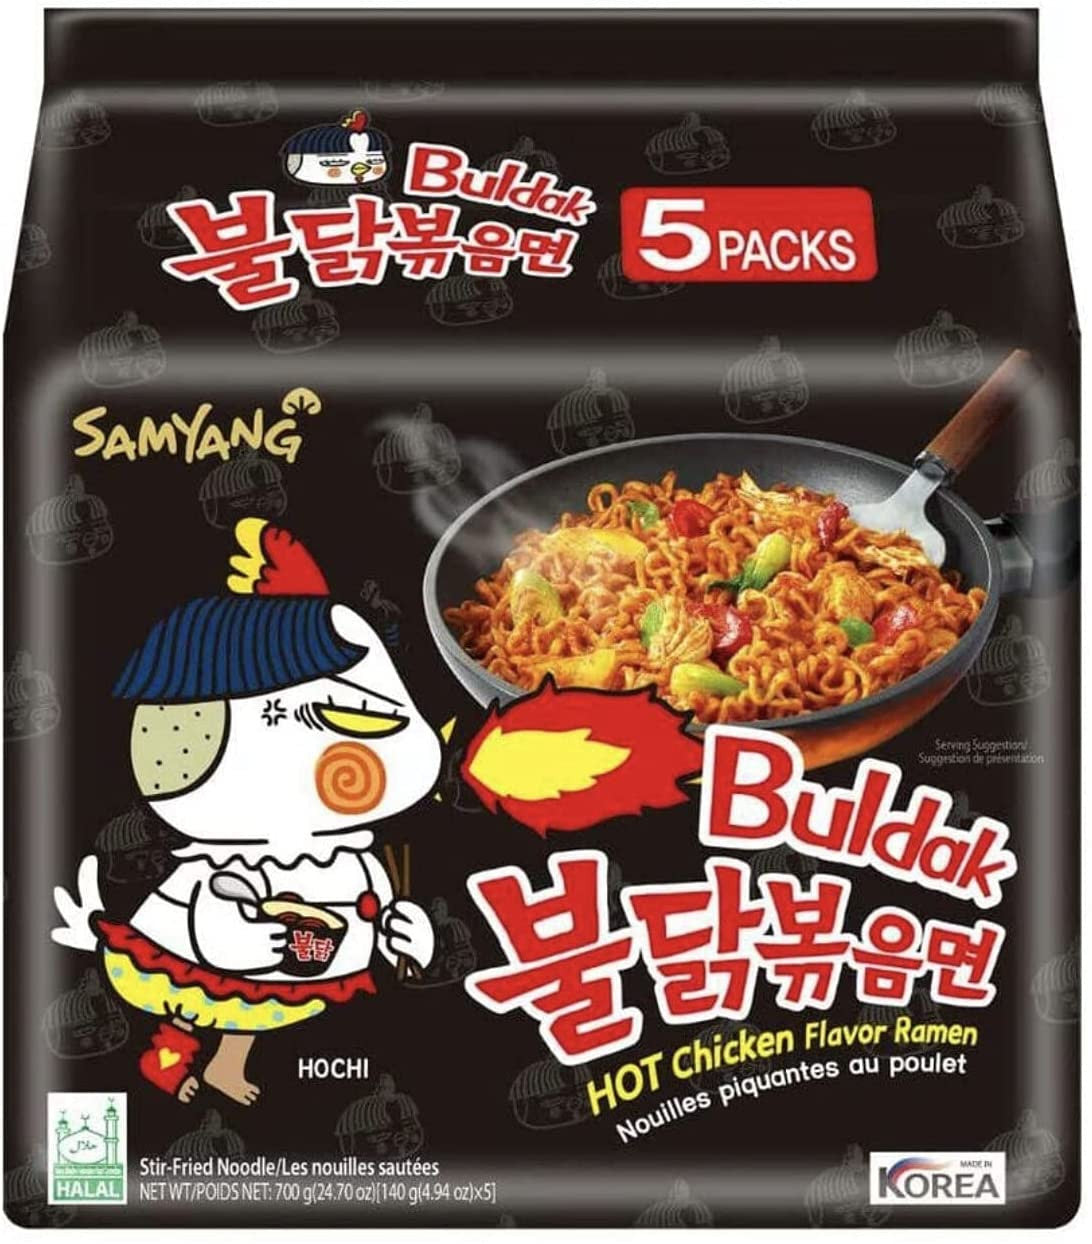 1. Buldak Artificial Spicy Chicken Flavor Ramen Regular Spicy 5